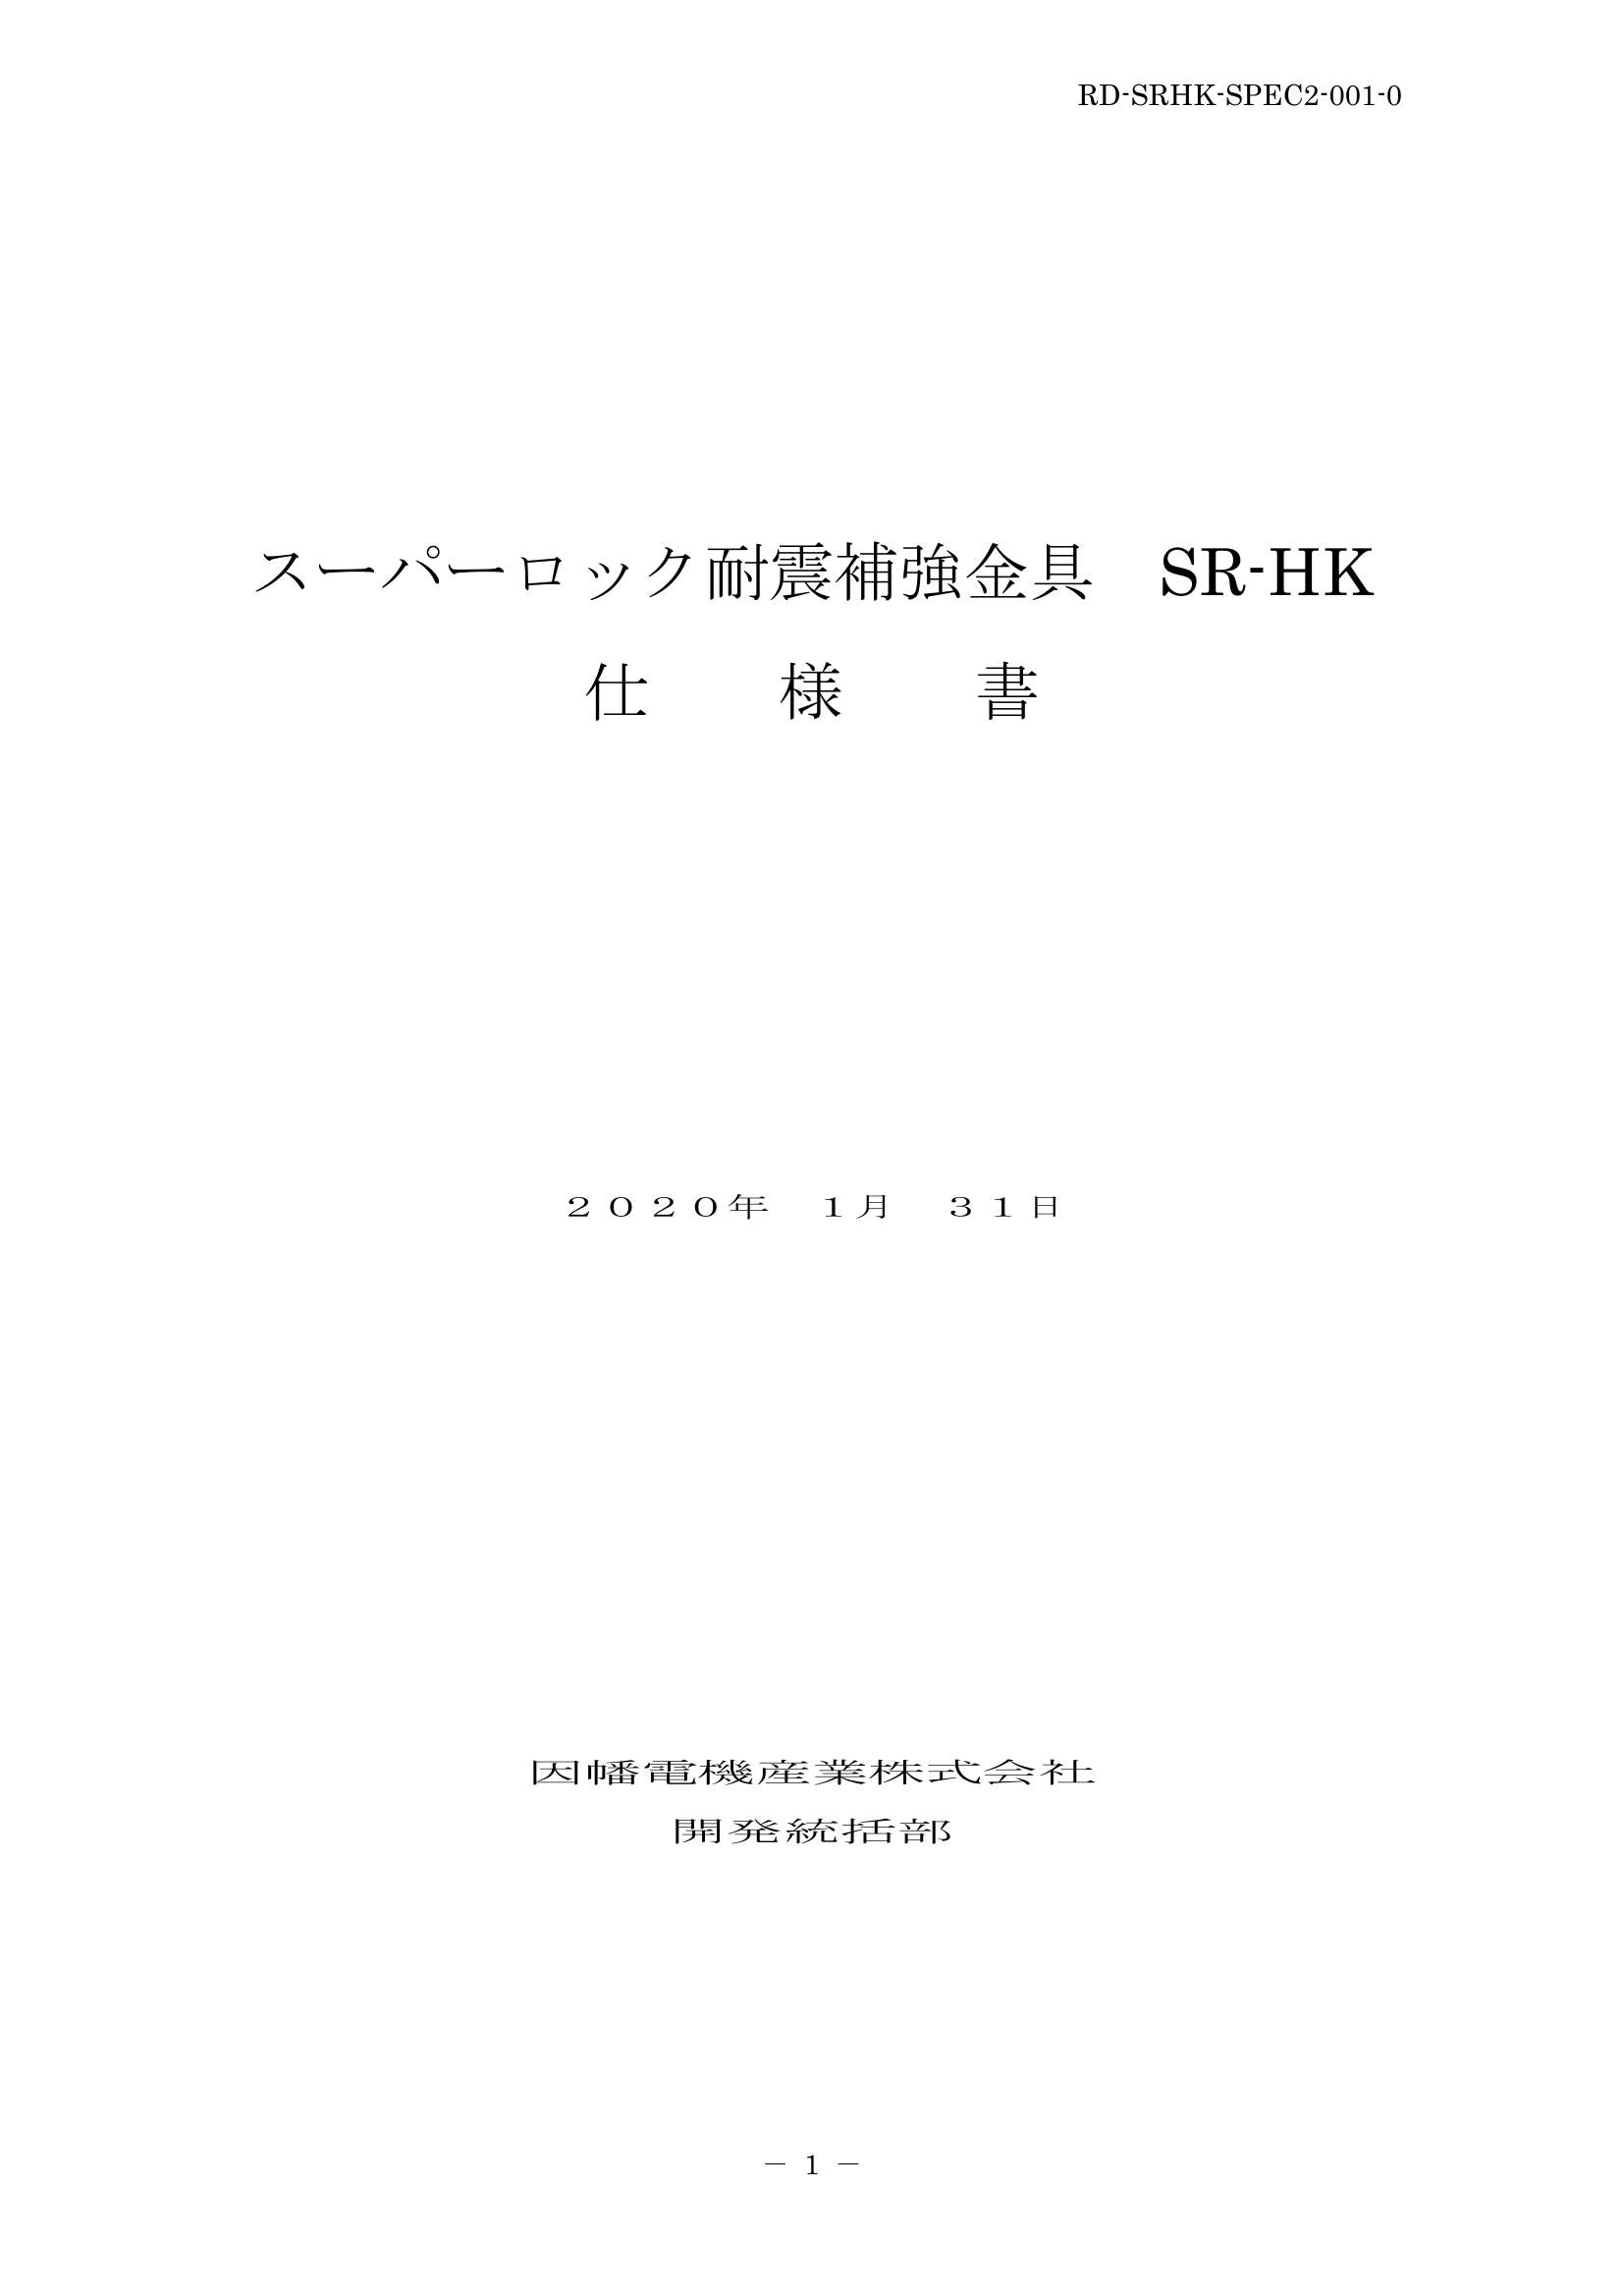 SR-HK_仕様書_20200131.pdf